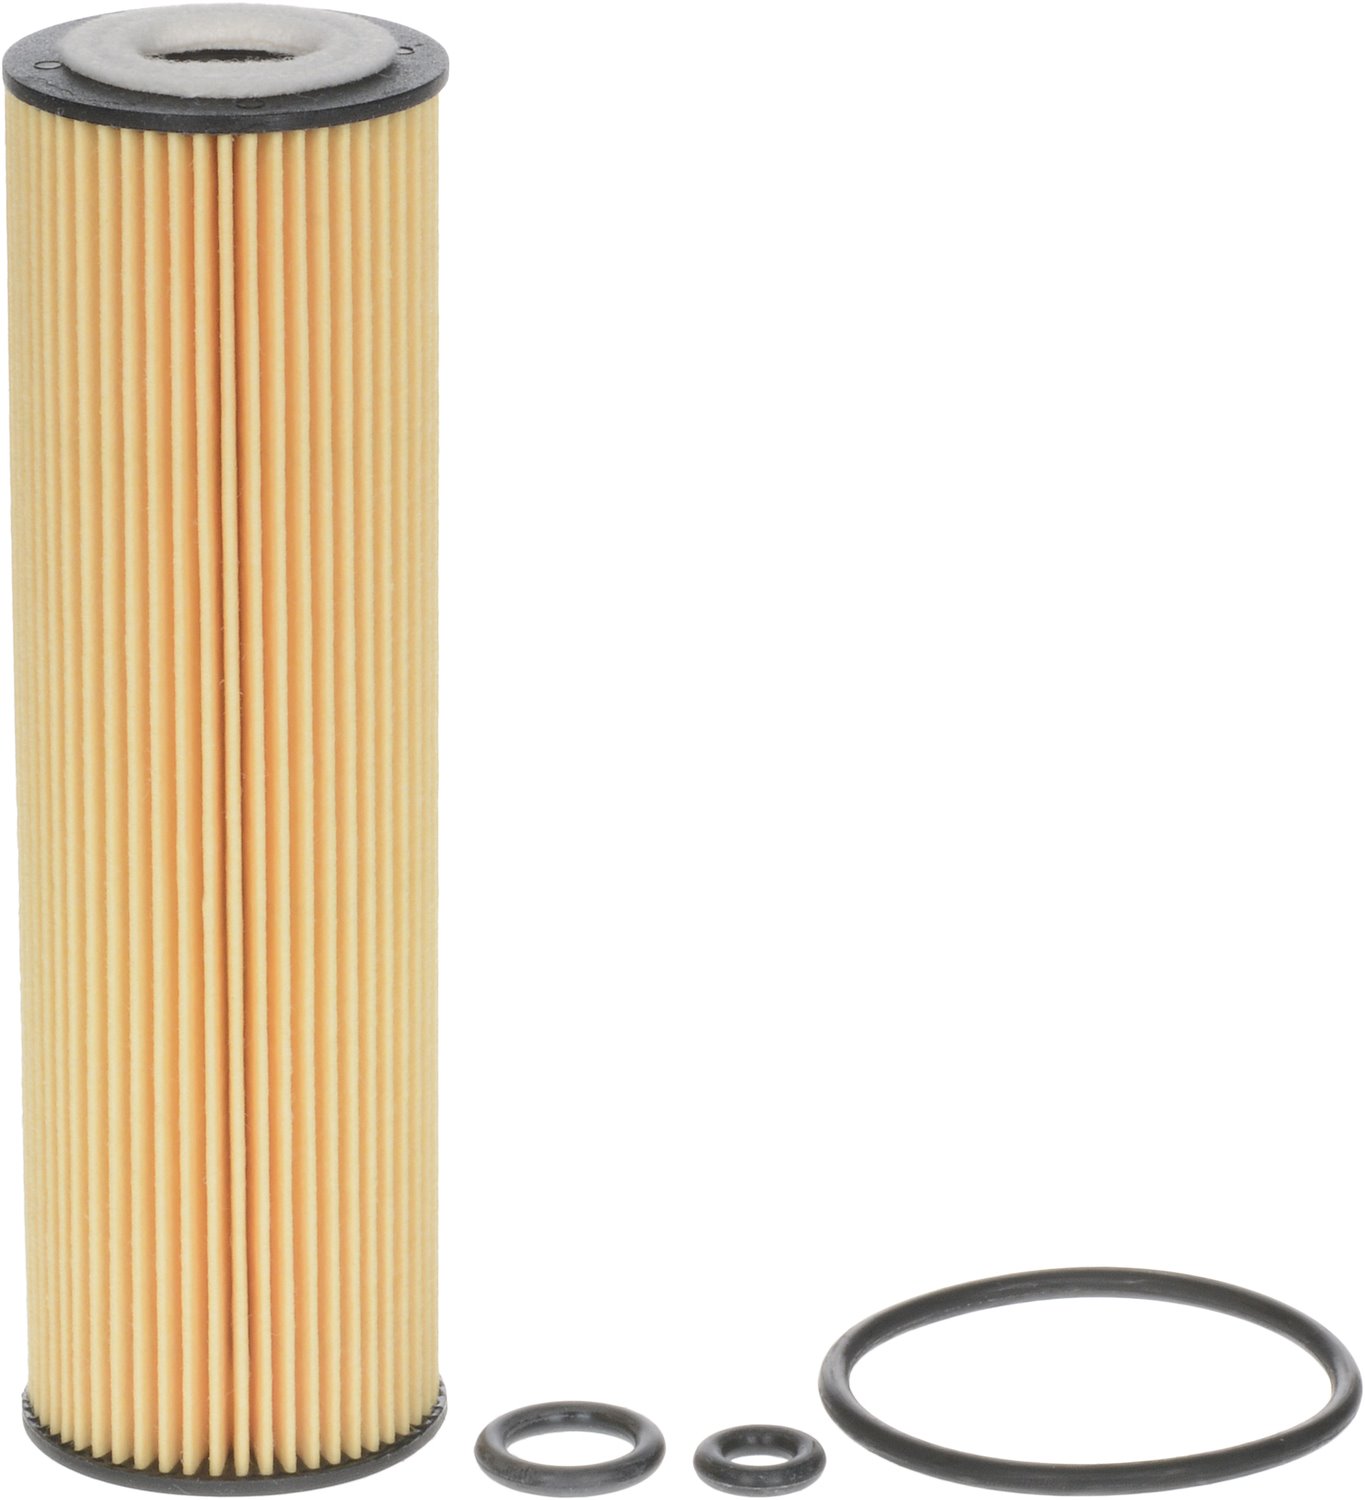 Cartridge Oil Filter